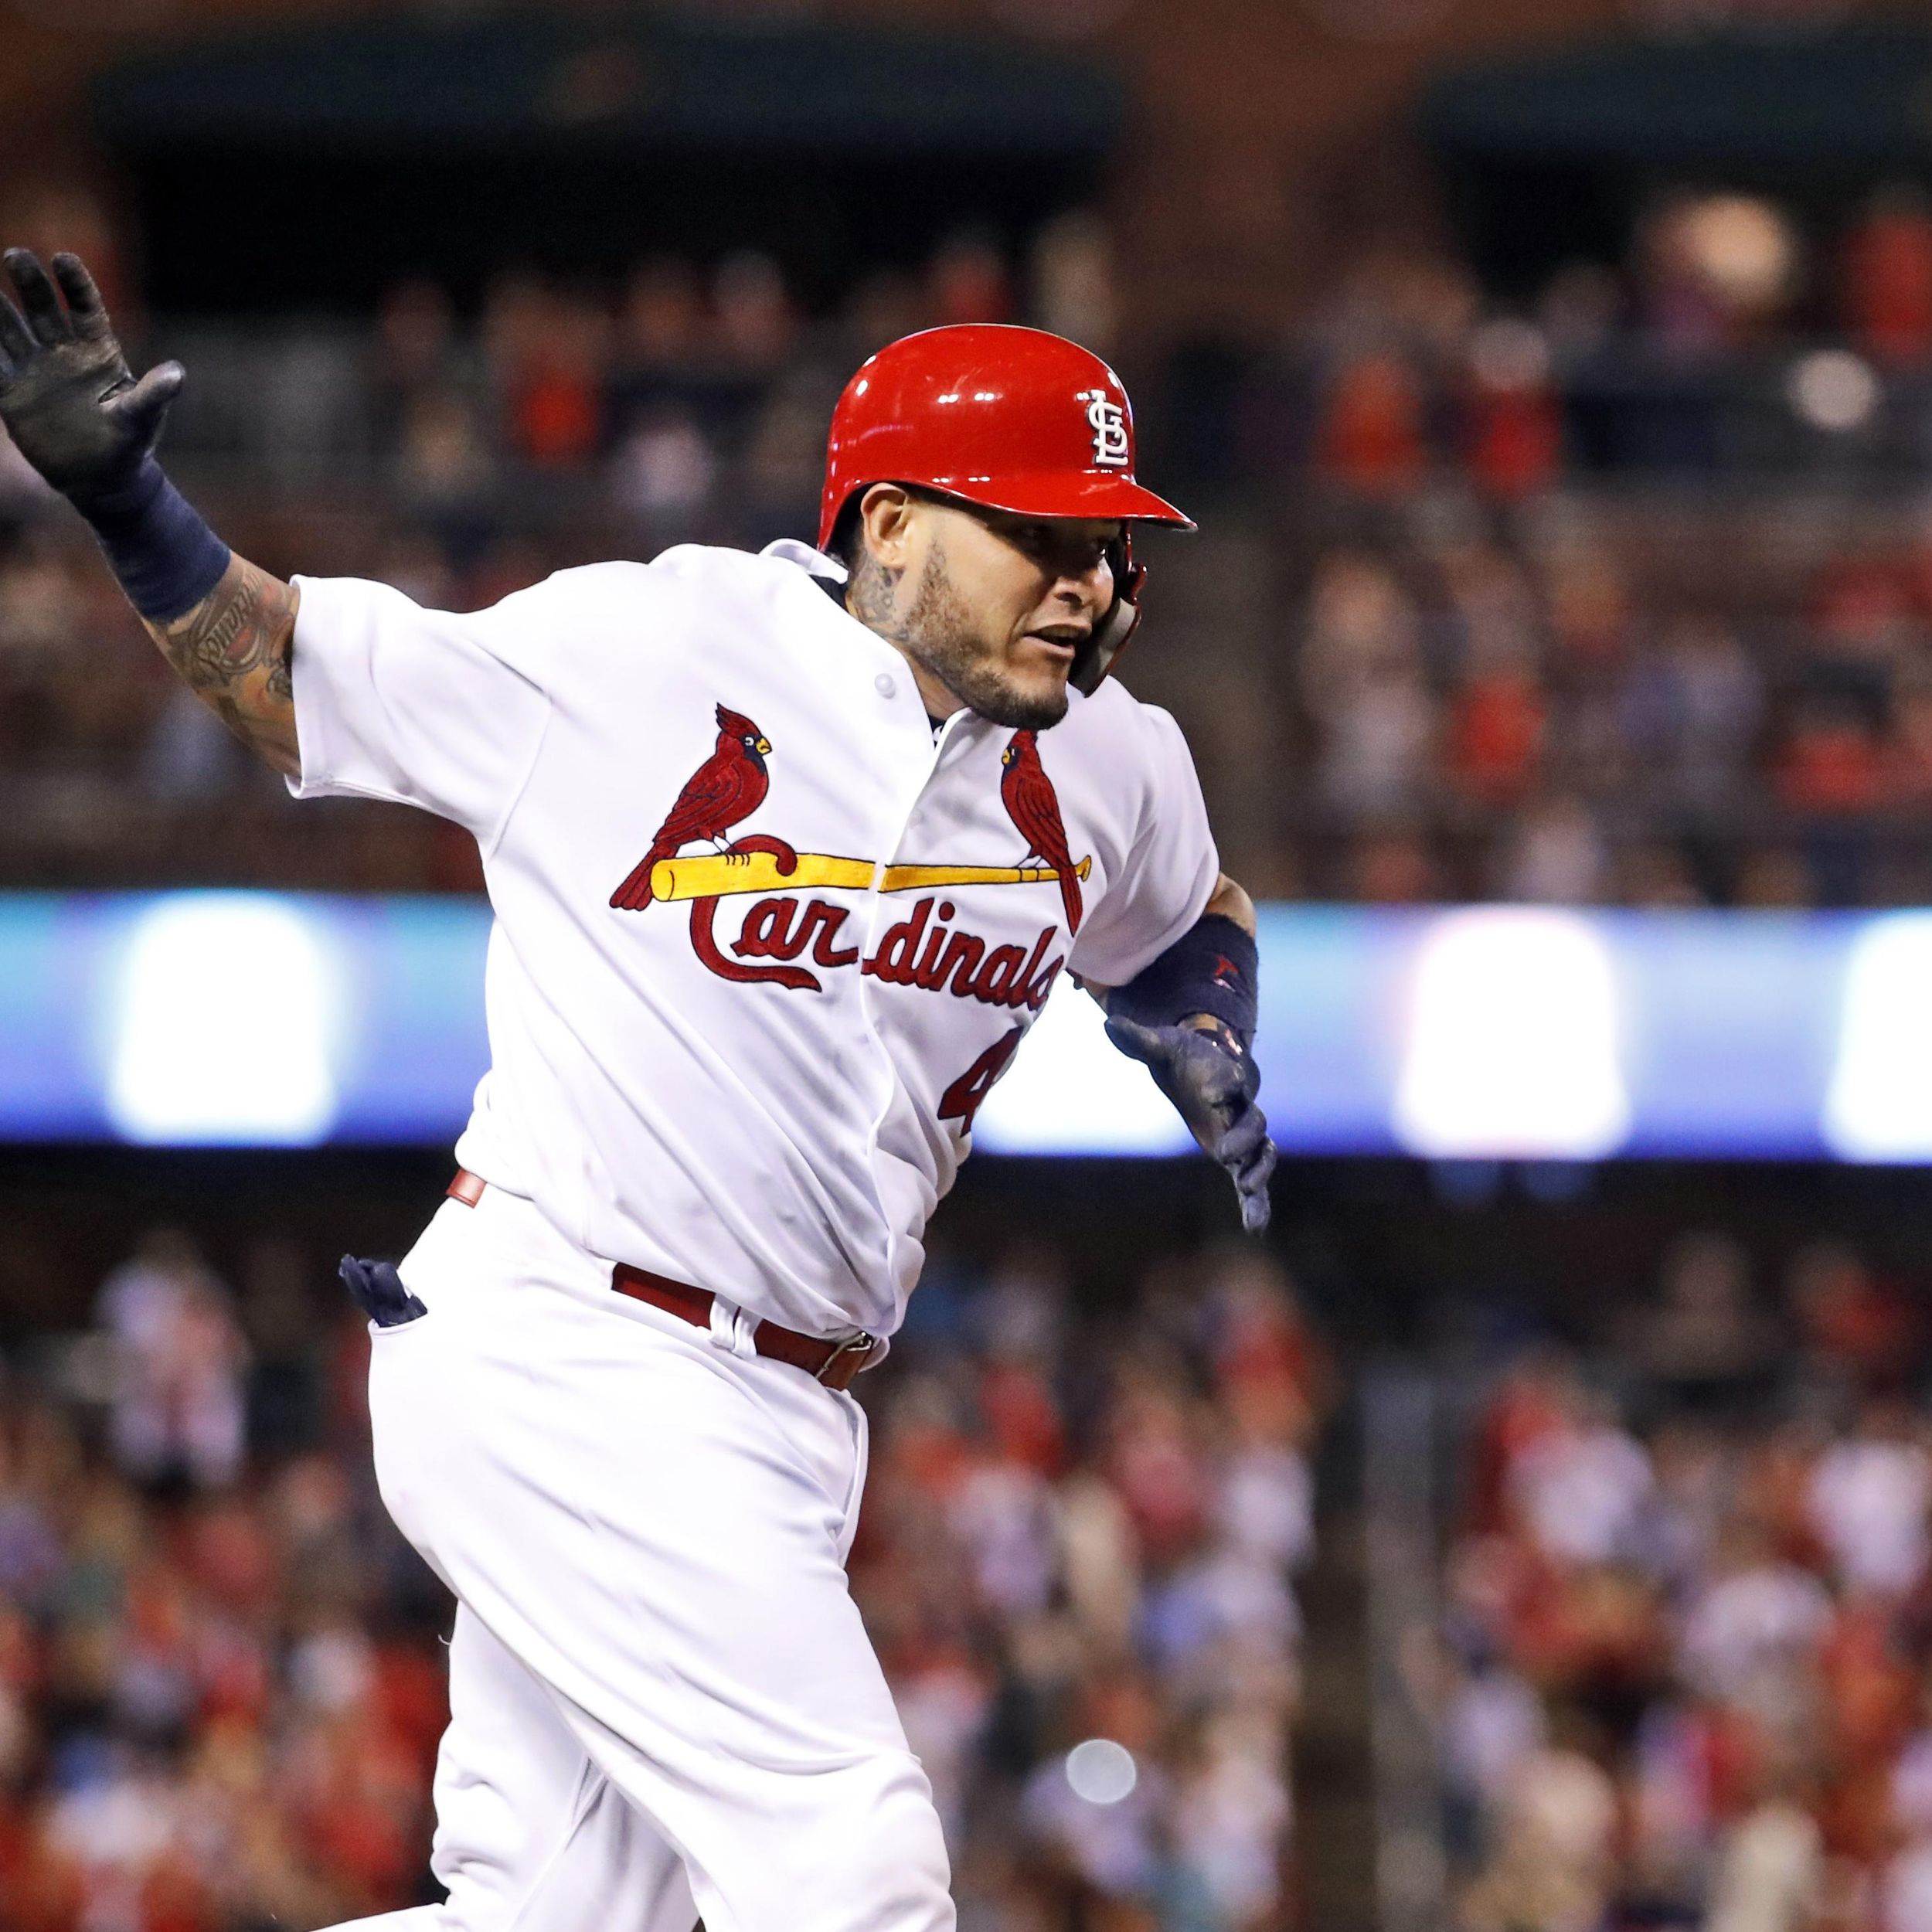 Cardinals catcher Yadier Molina wins Roberto Clemente Award